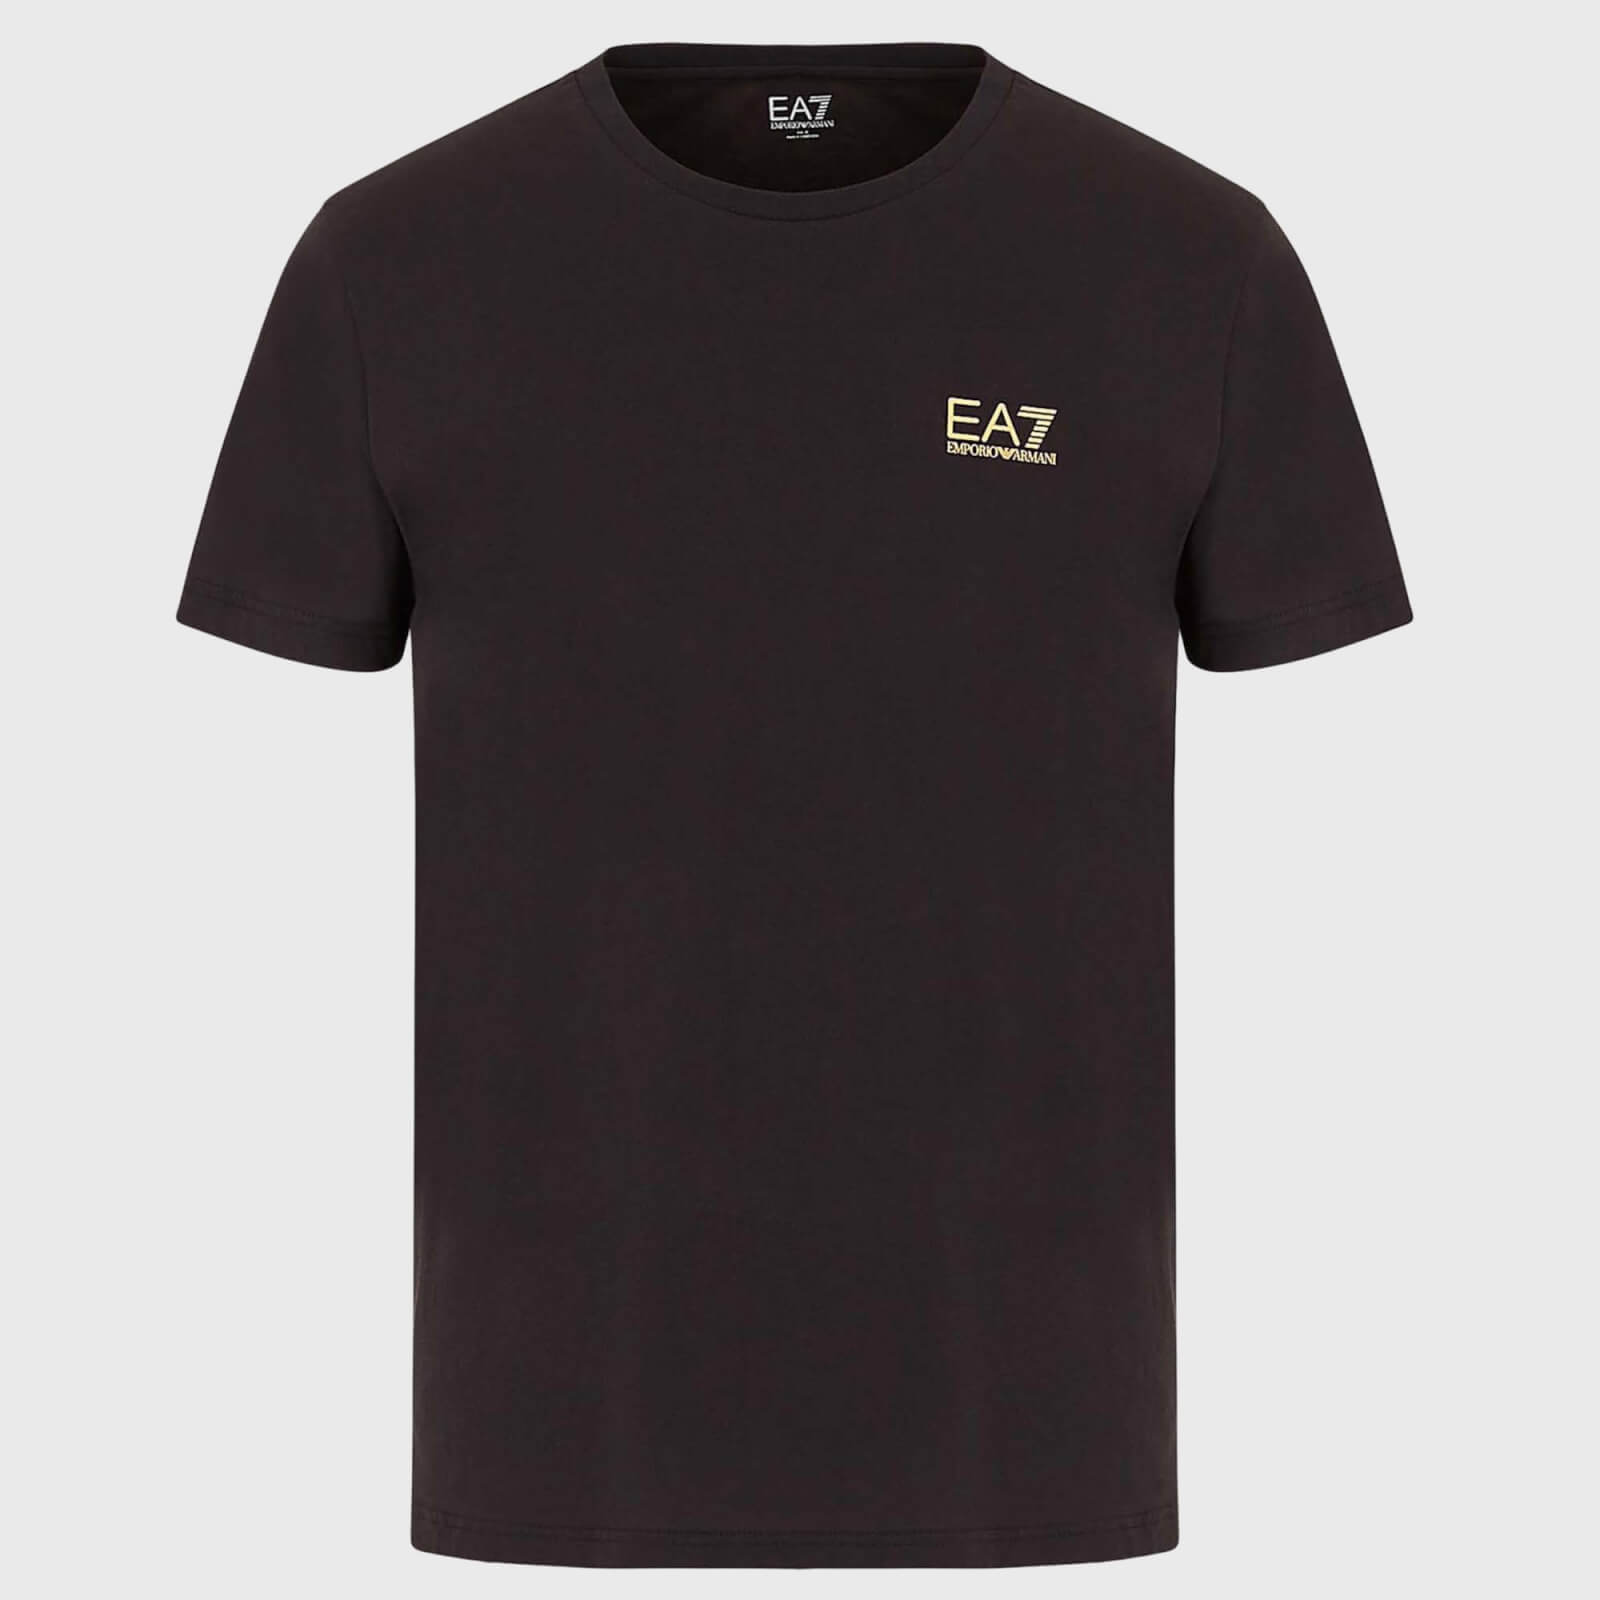 EA7 Men's Core Identity T-Shirt - Black/Gold